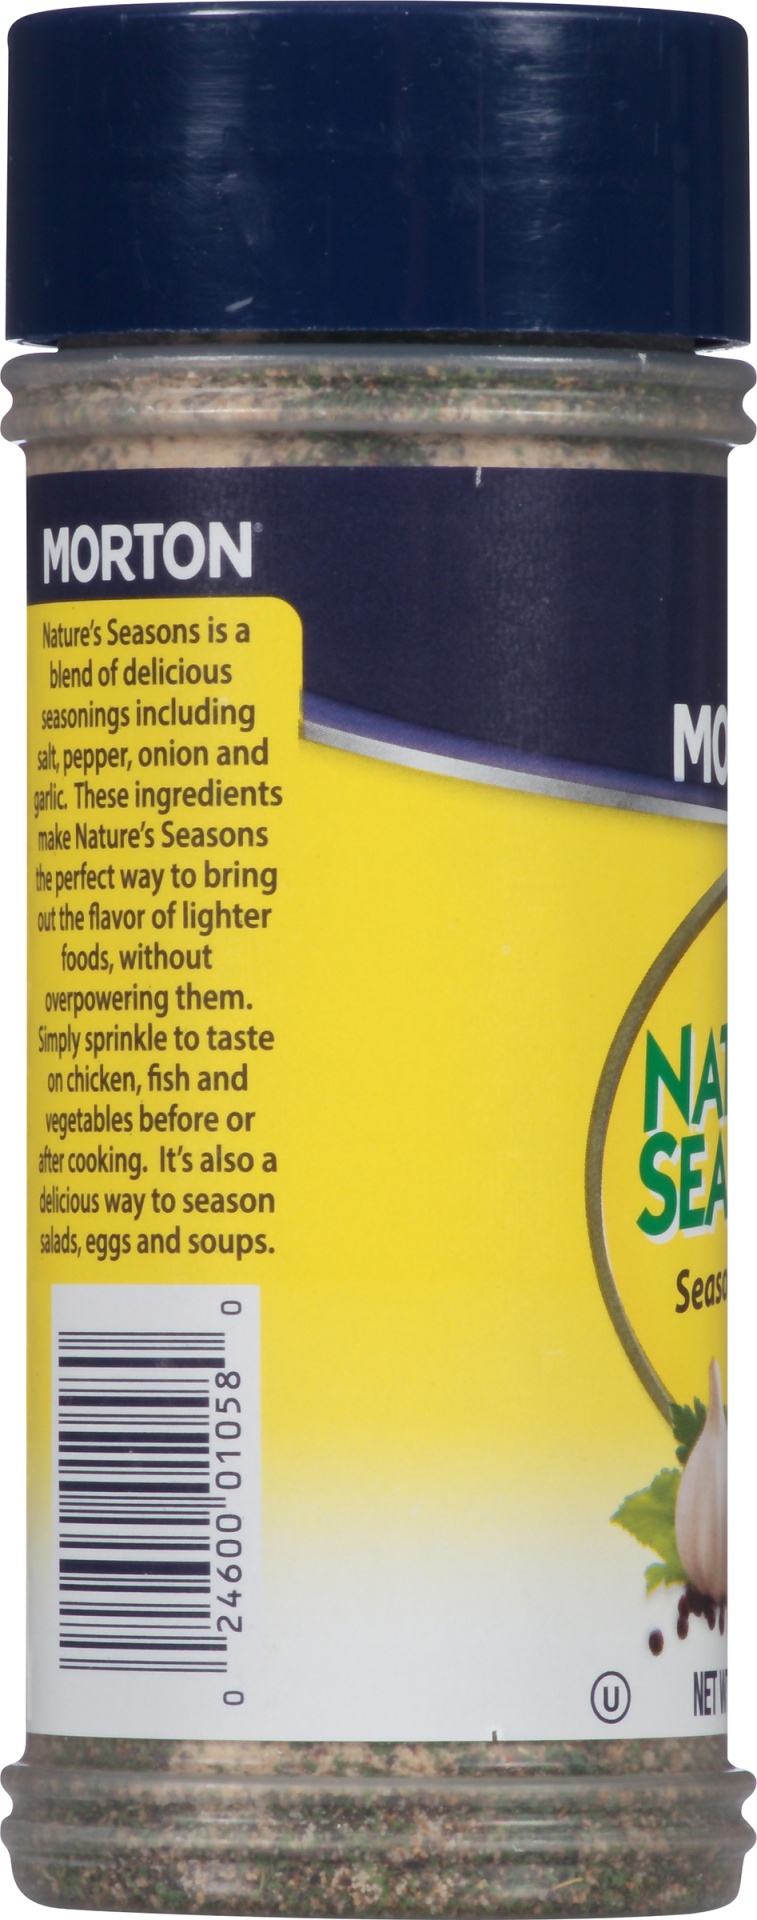 Morton Nature's Seasons Seasoning Blend 7.5oz Two Pack